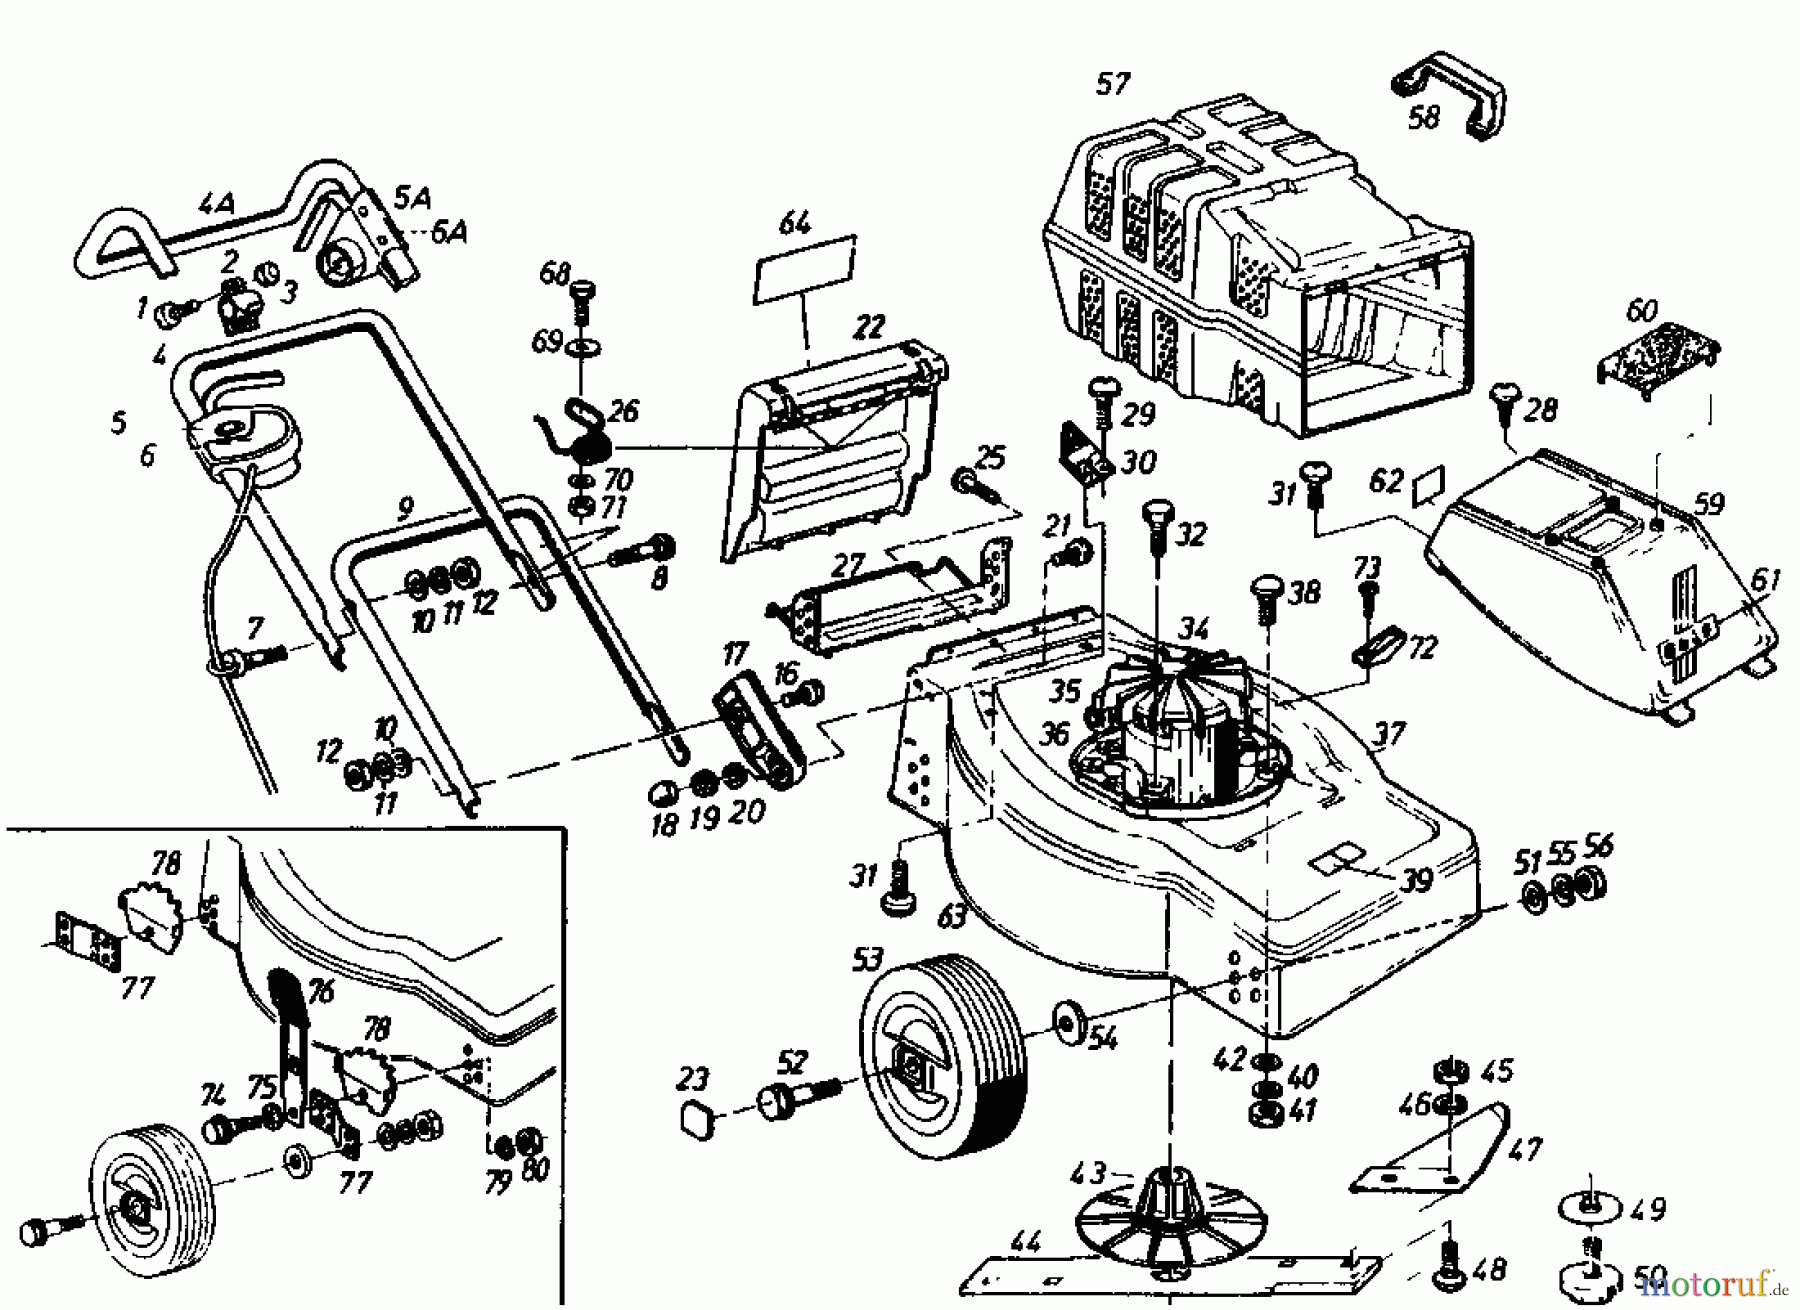  Golf Electric mower E 02881.01  (1987) Basic machine